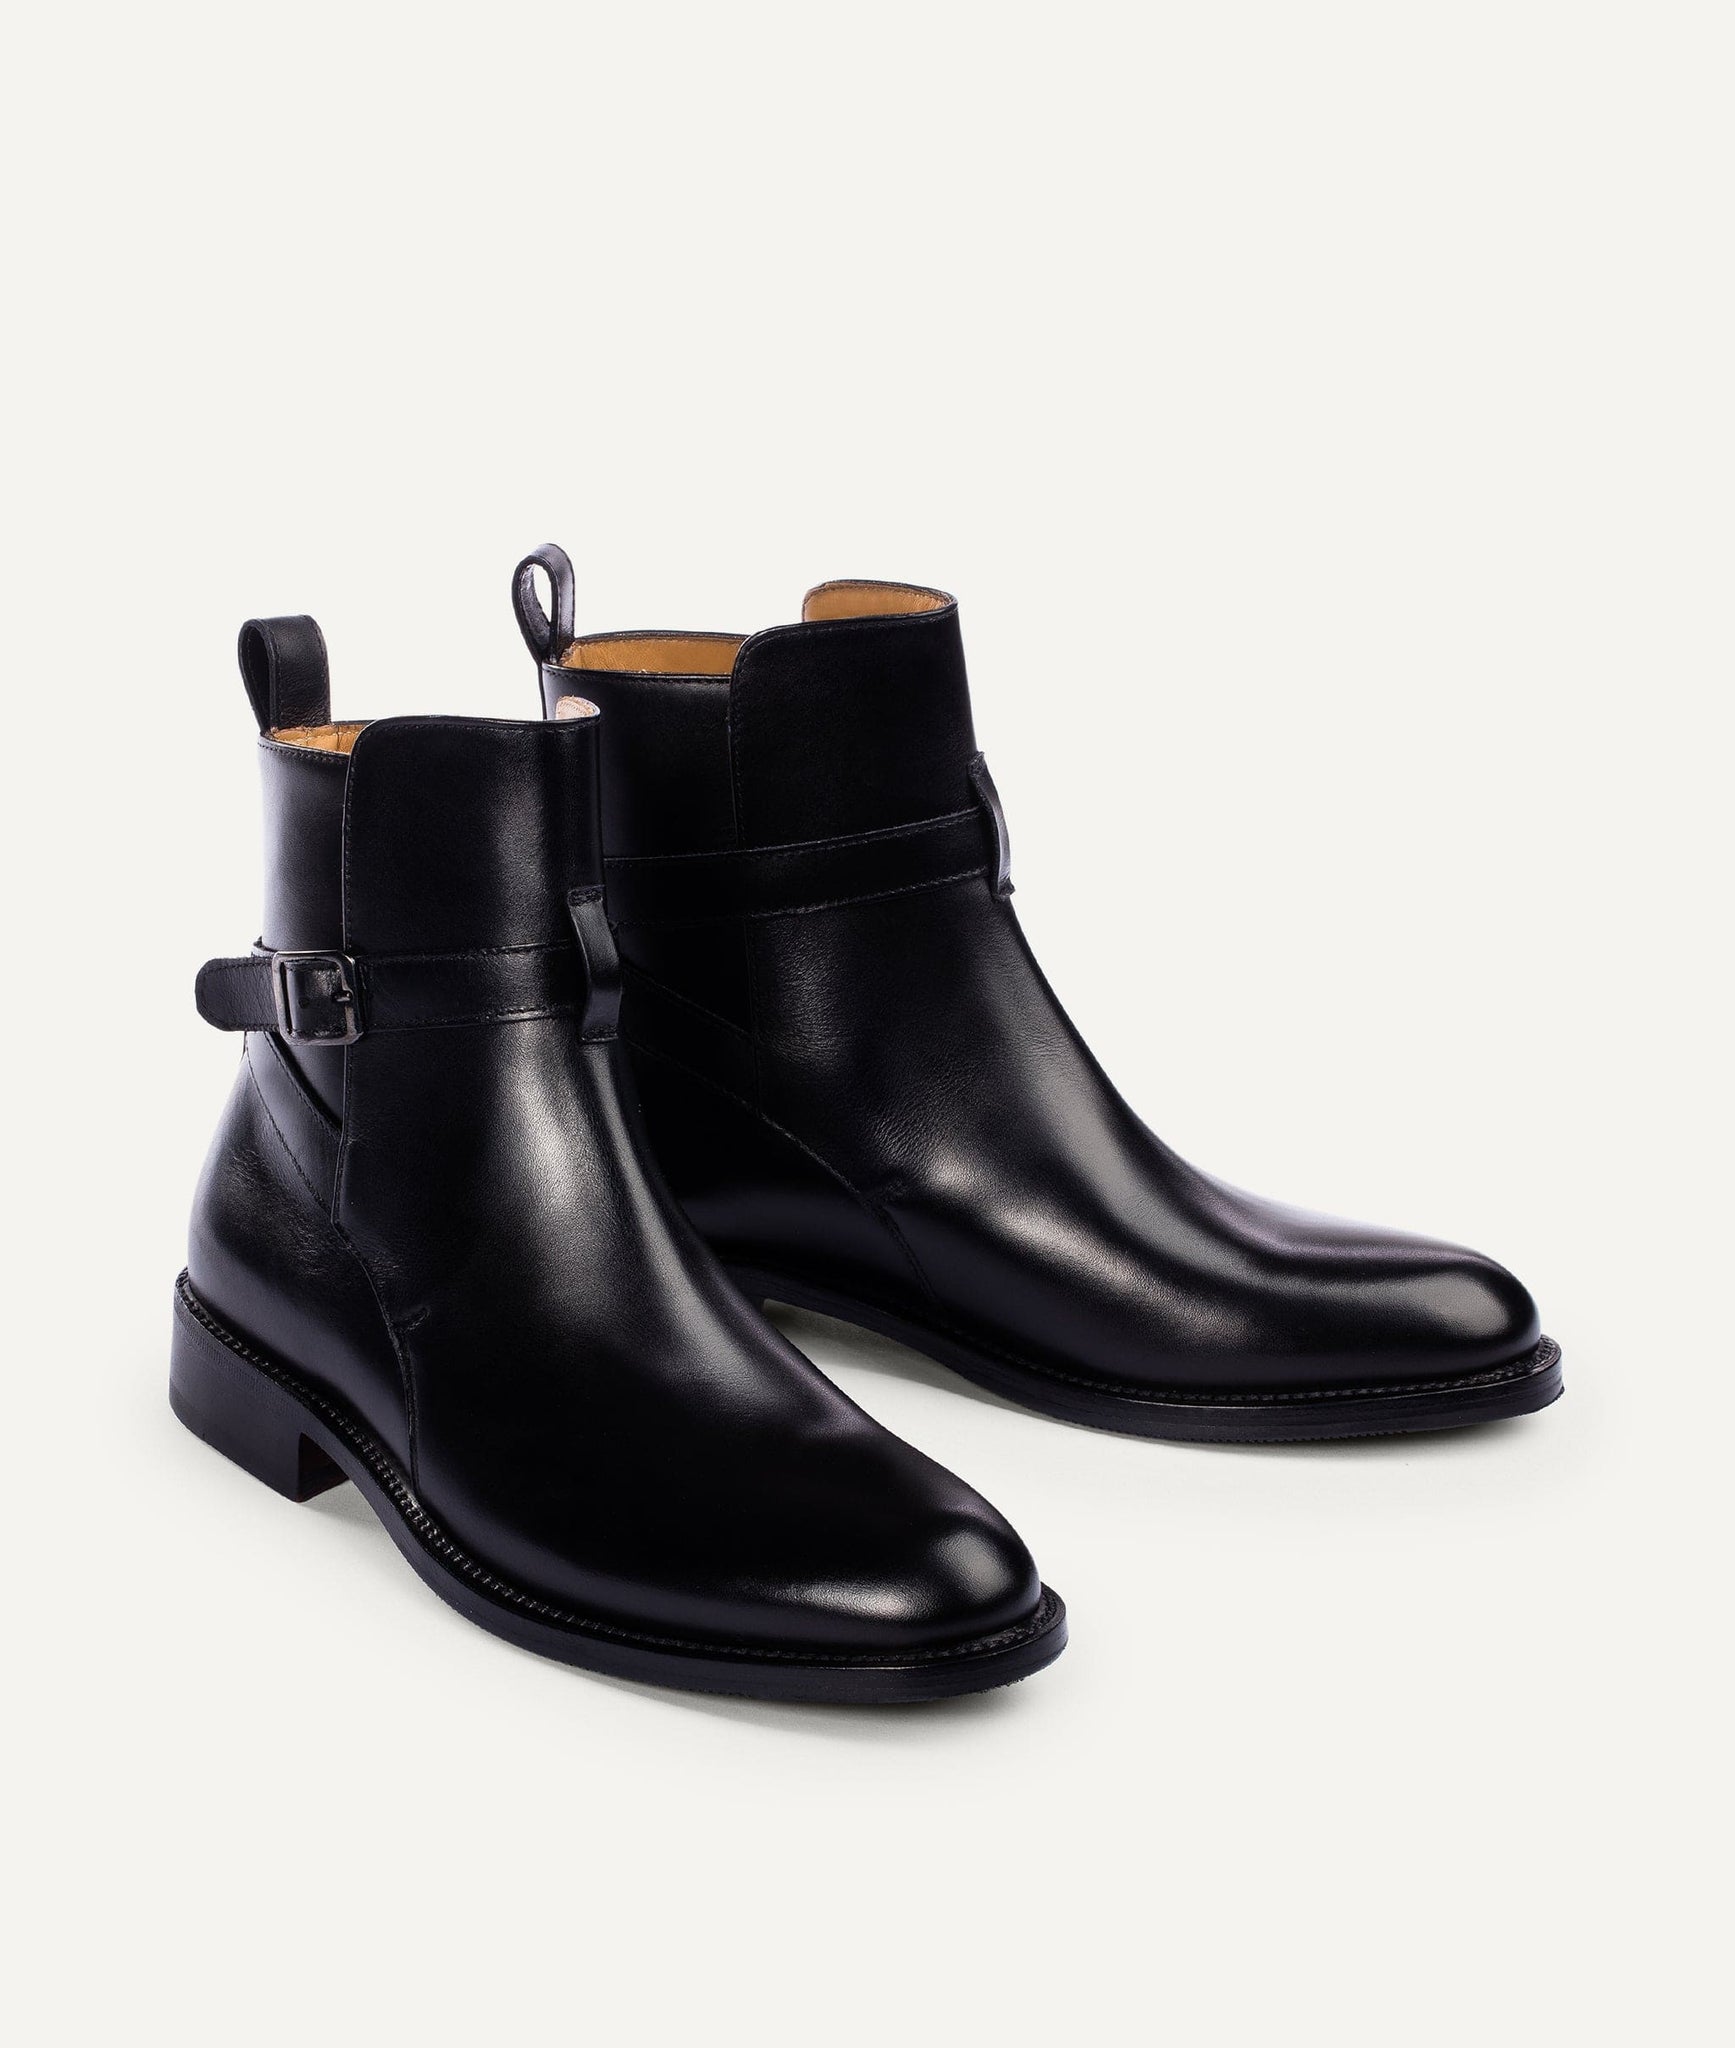 Jodphur Boot in Calf Leather